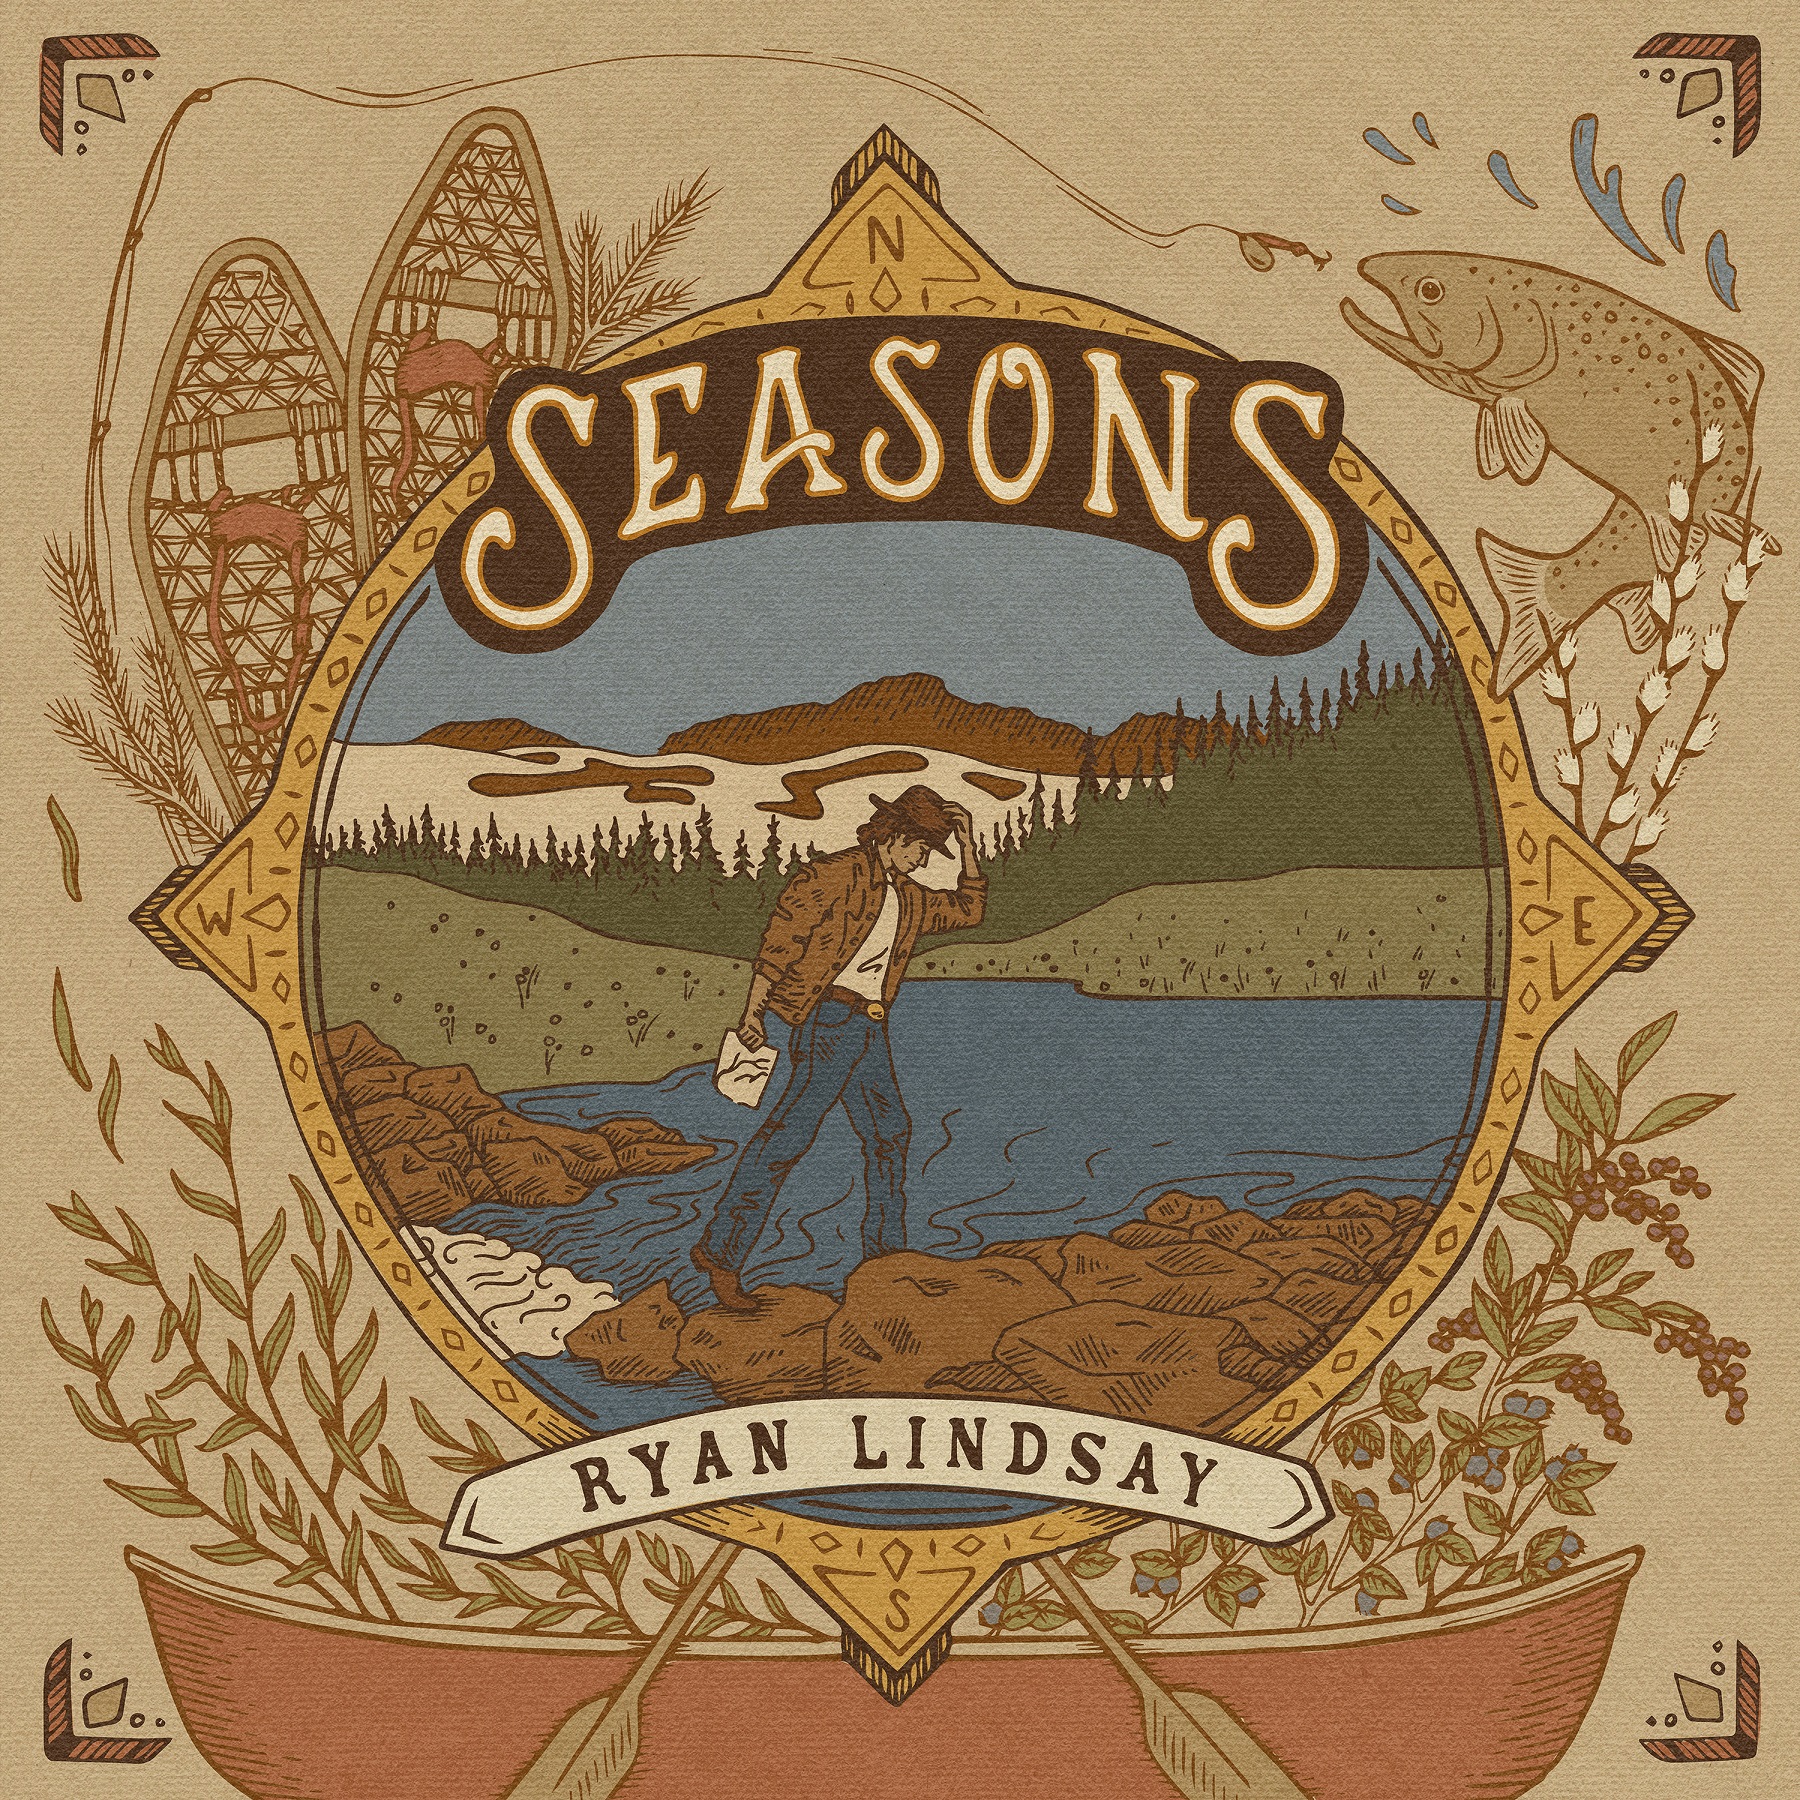 Canadian country artist Ryan Lindsay releases introspective new album, “Seasons”